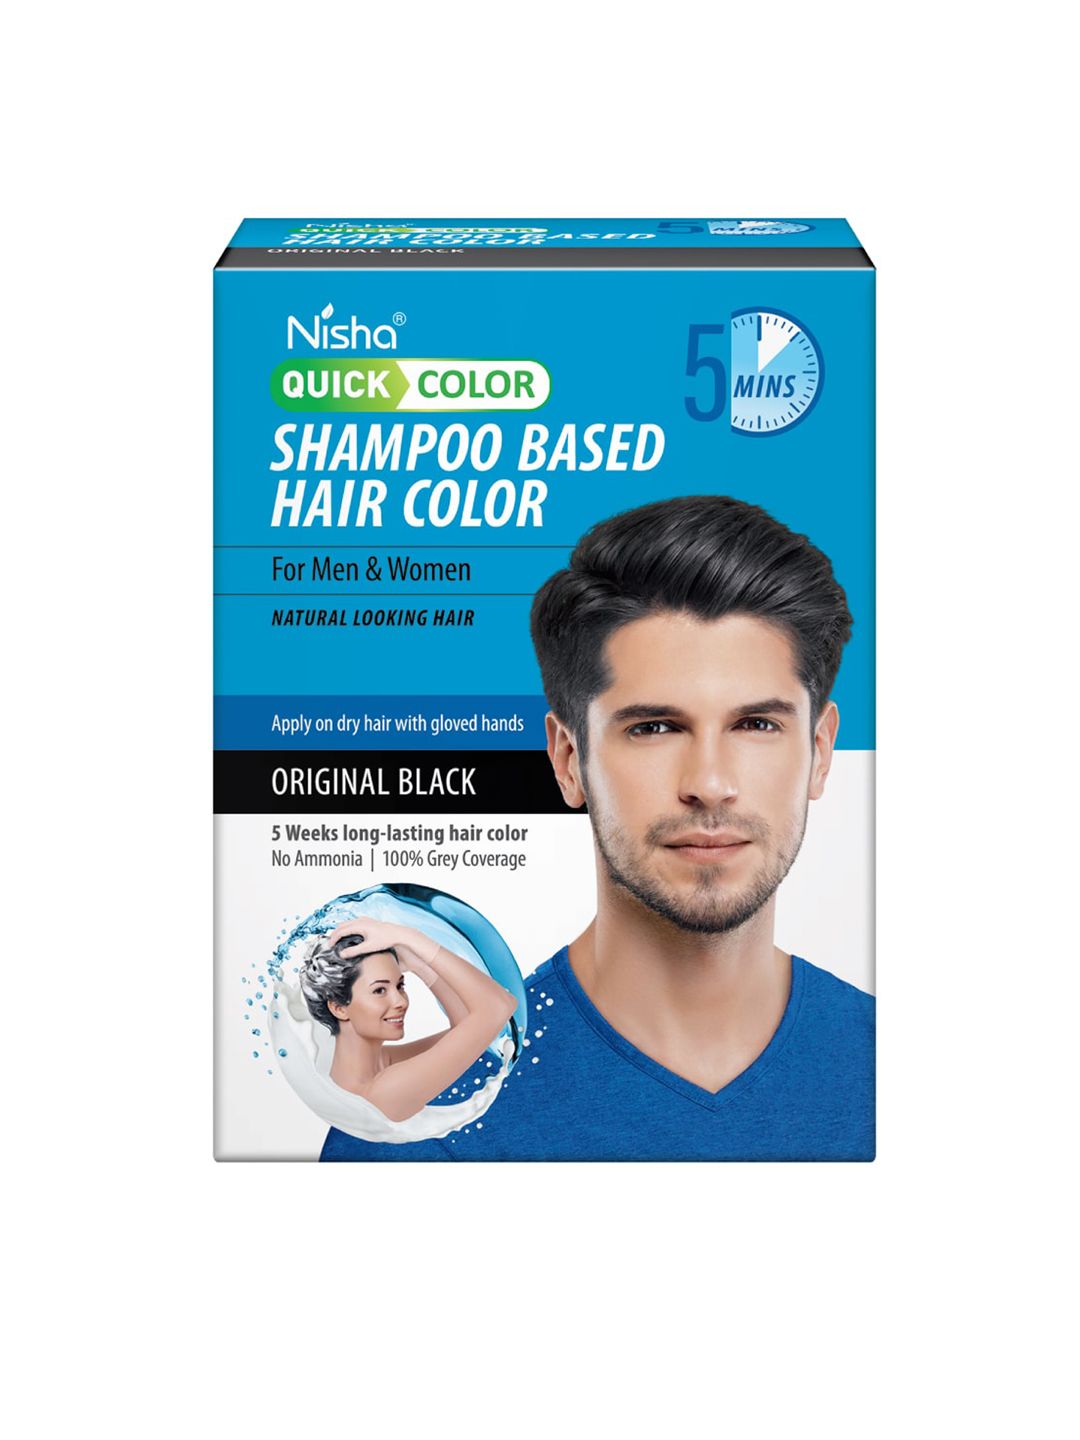 Nisha Quick Color Shampoo Based Hair Color - Original Black 200 ml Price in India